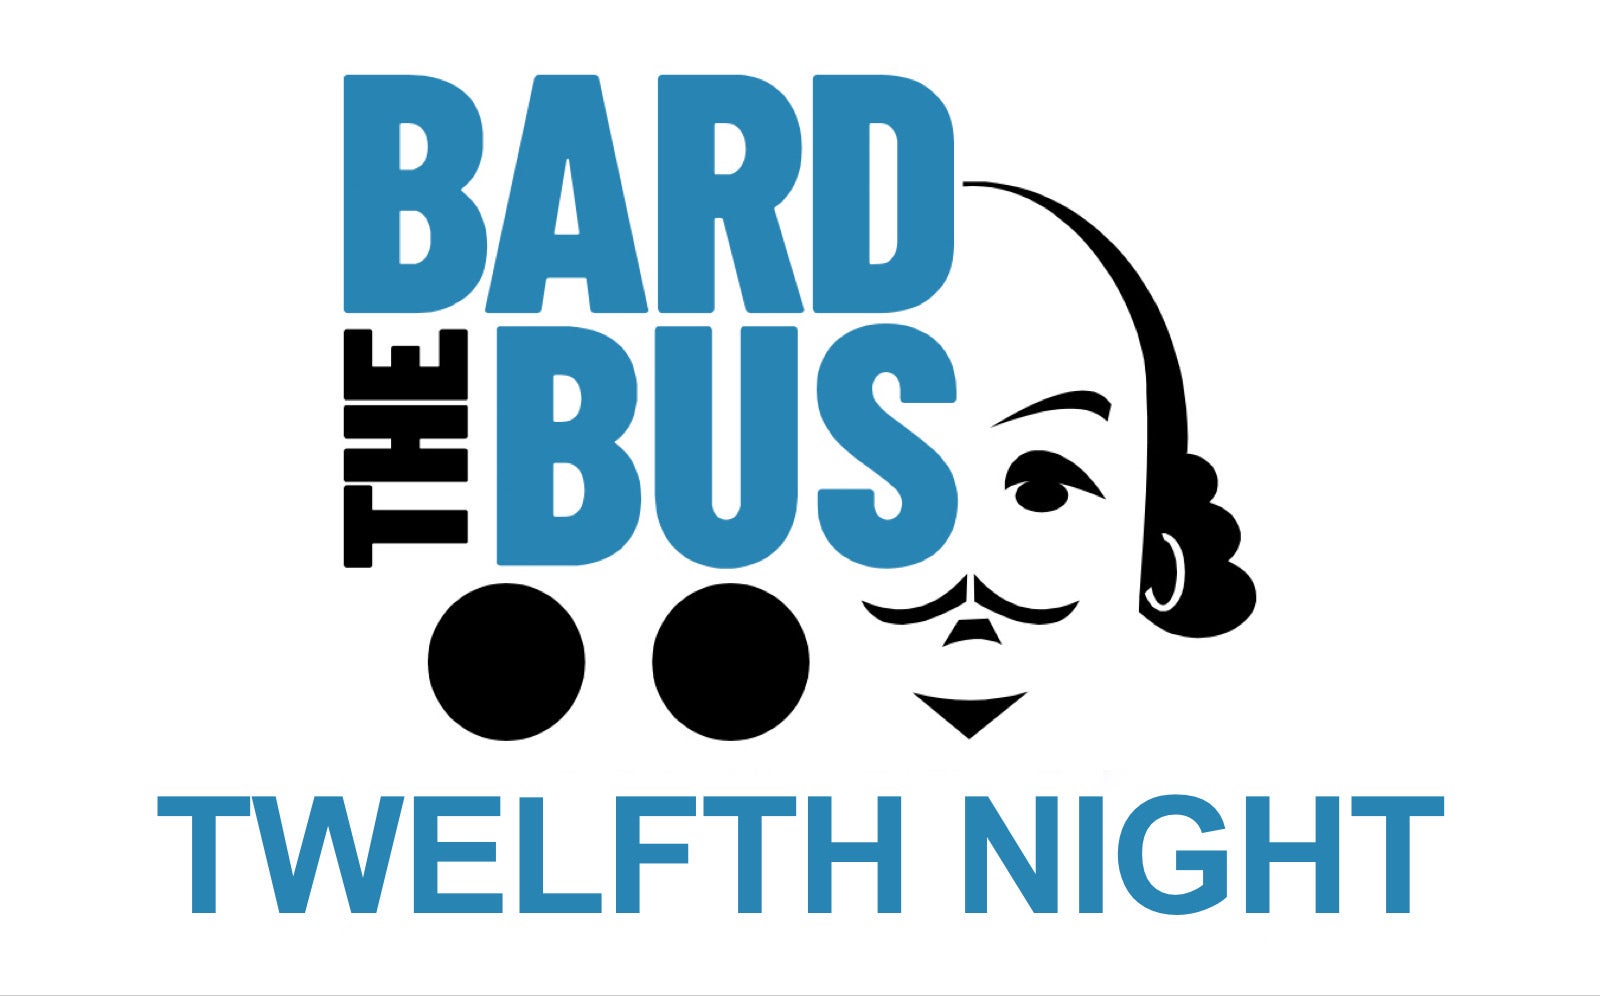 Apex Theatre Studio's Bard Bus presents Twelfth Night